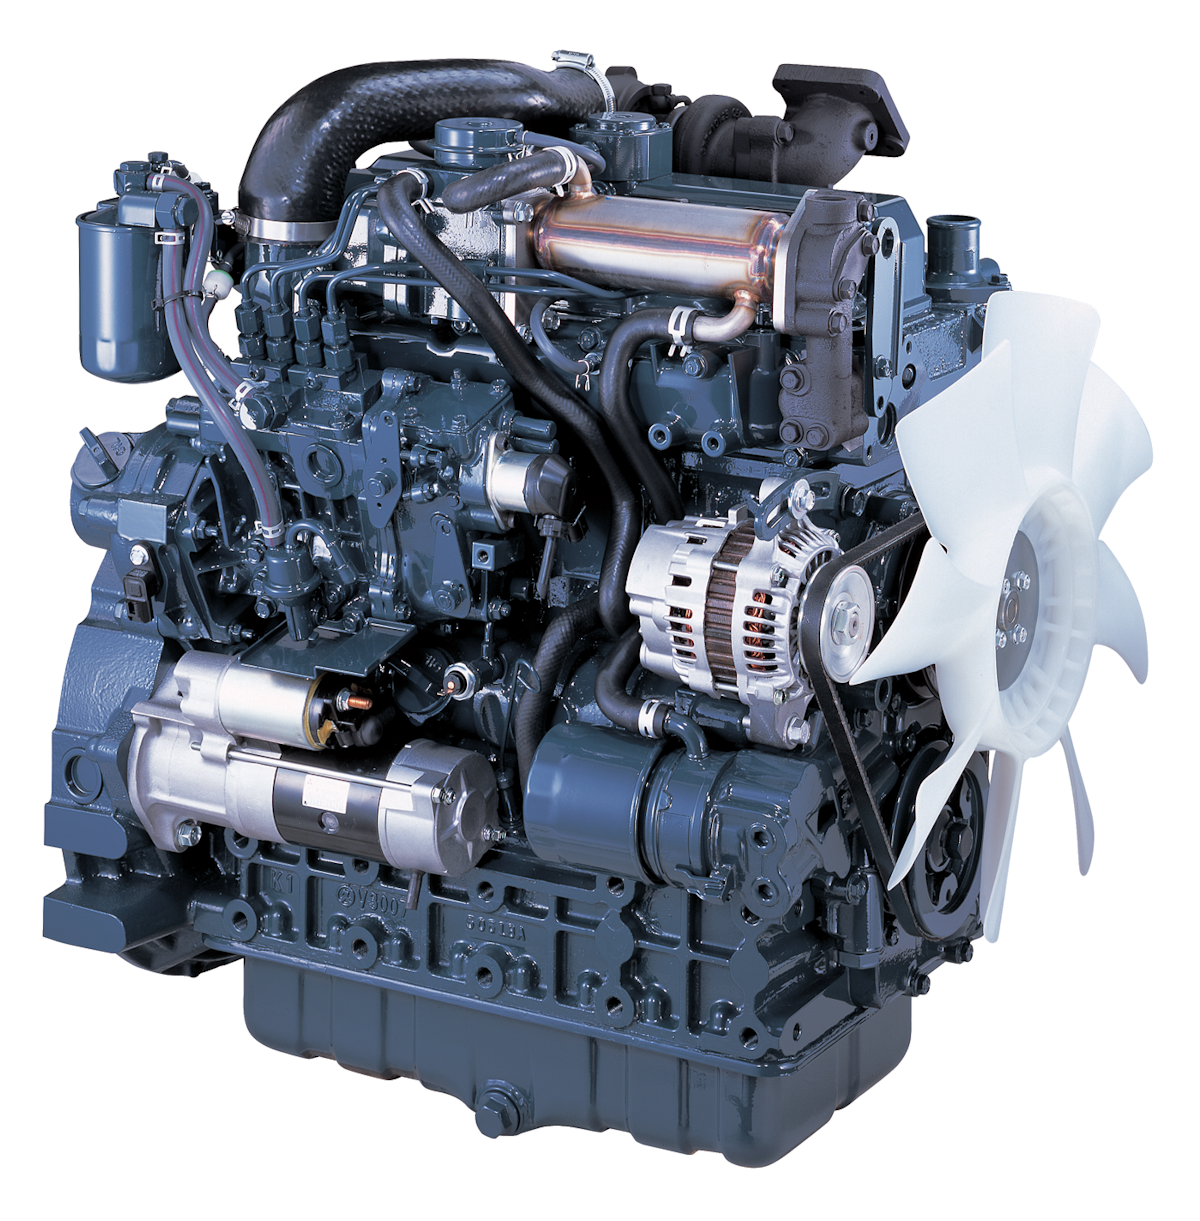 Kubota 07 Series Engines From: Kubota Engine America Corp. | OEM Off